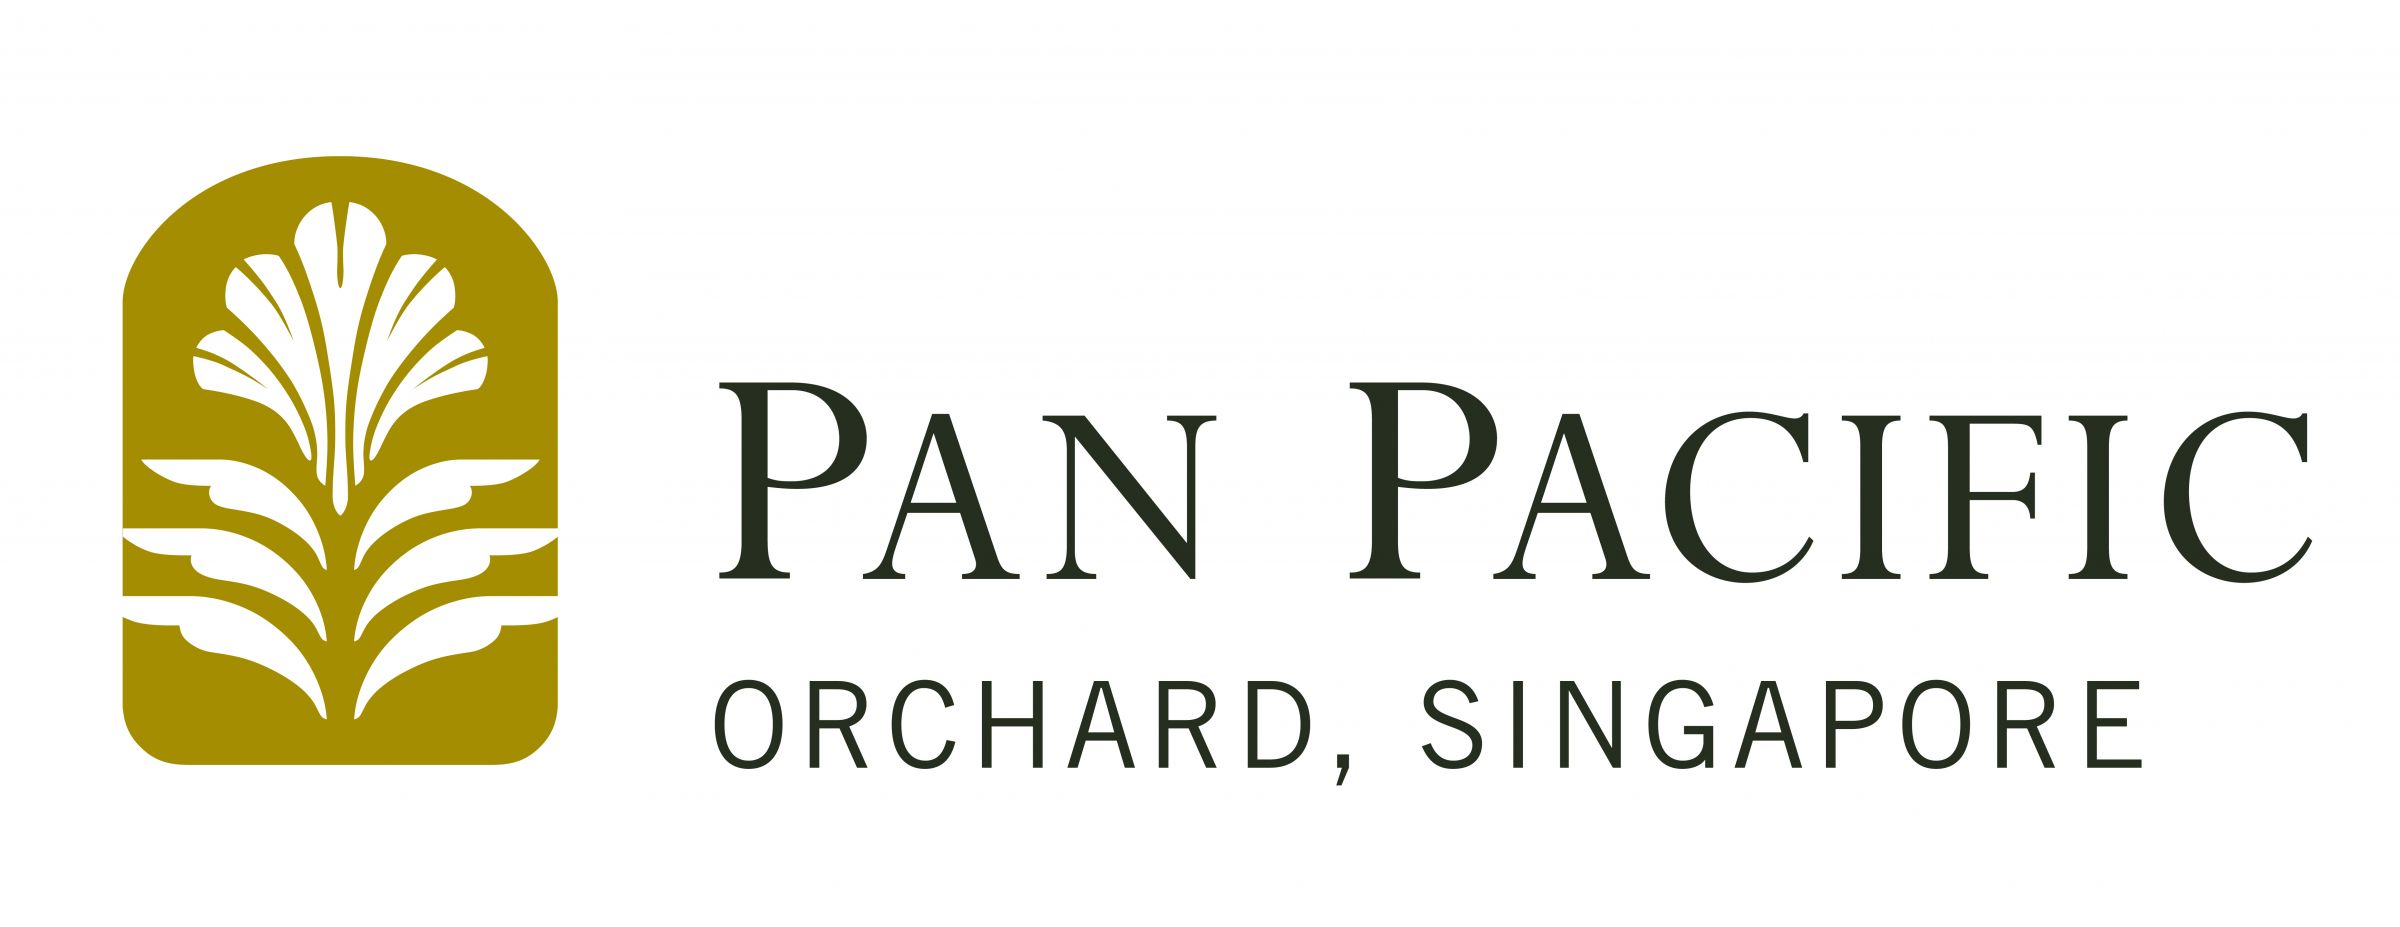 Pan Pacific Perth. Pan Pacific logo PNG.